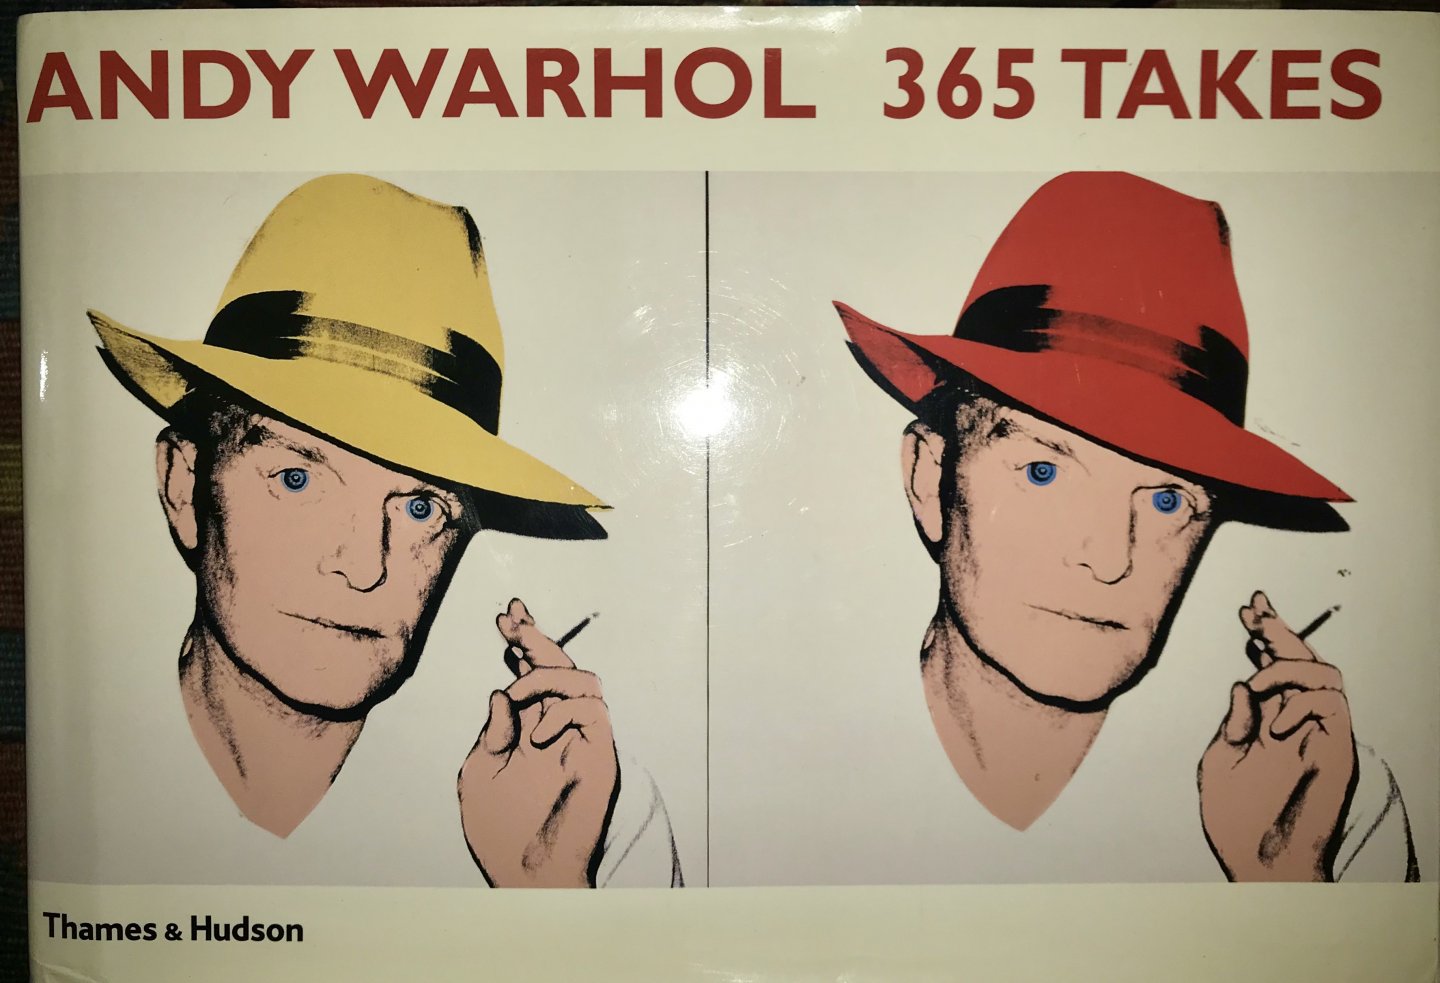 Warhol, Andy - Andy Warhol 365 Takes